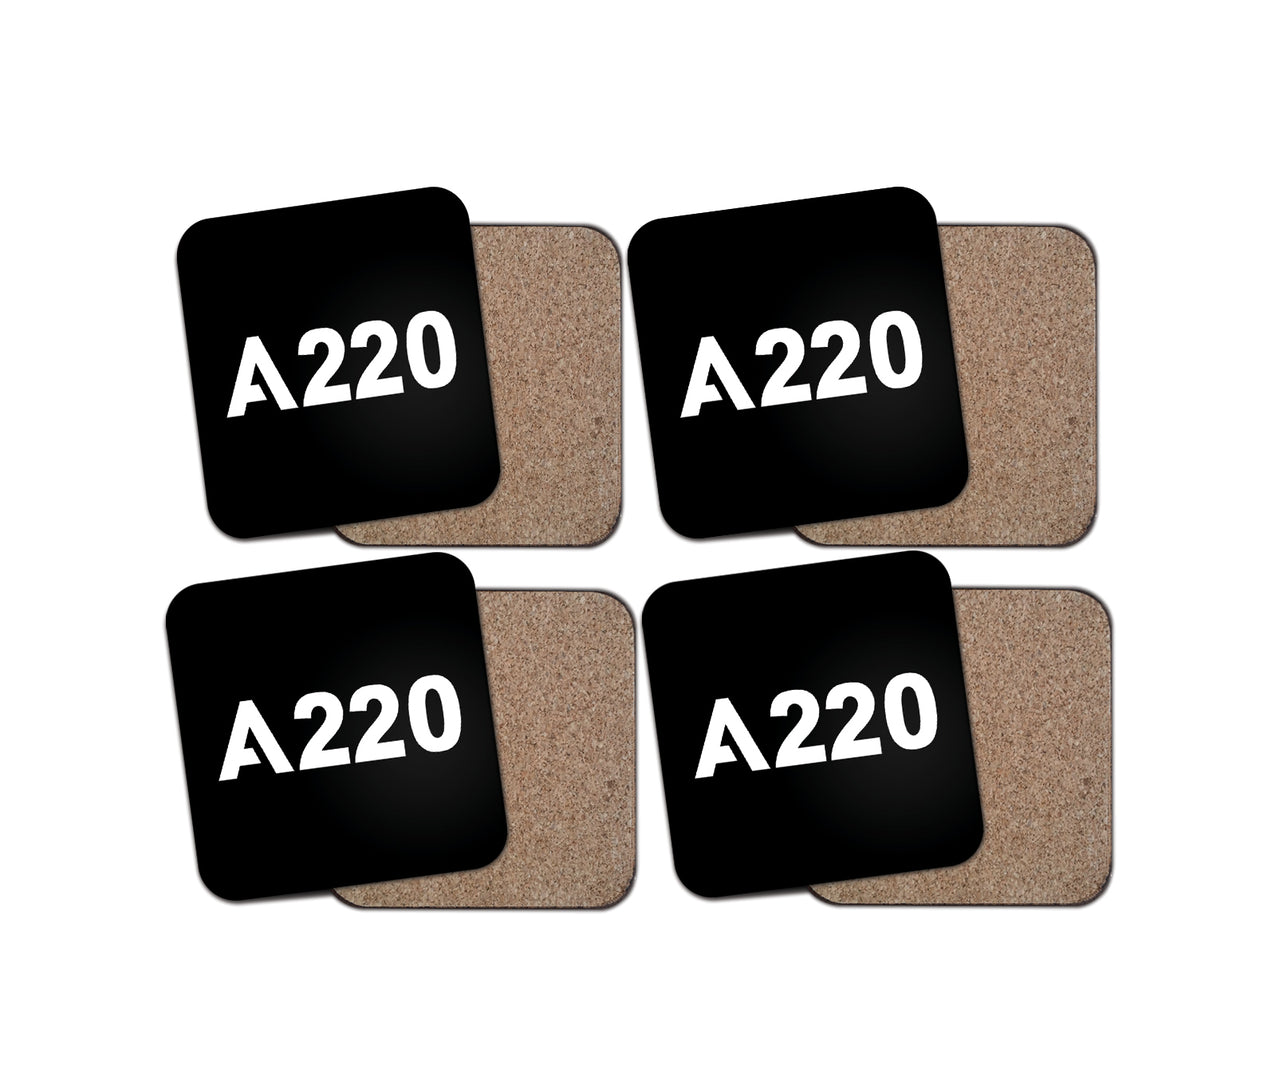 A220 Flat Text Designed Coasters